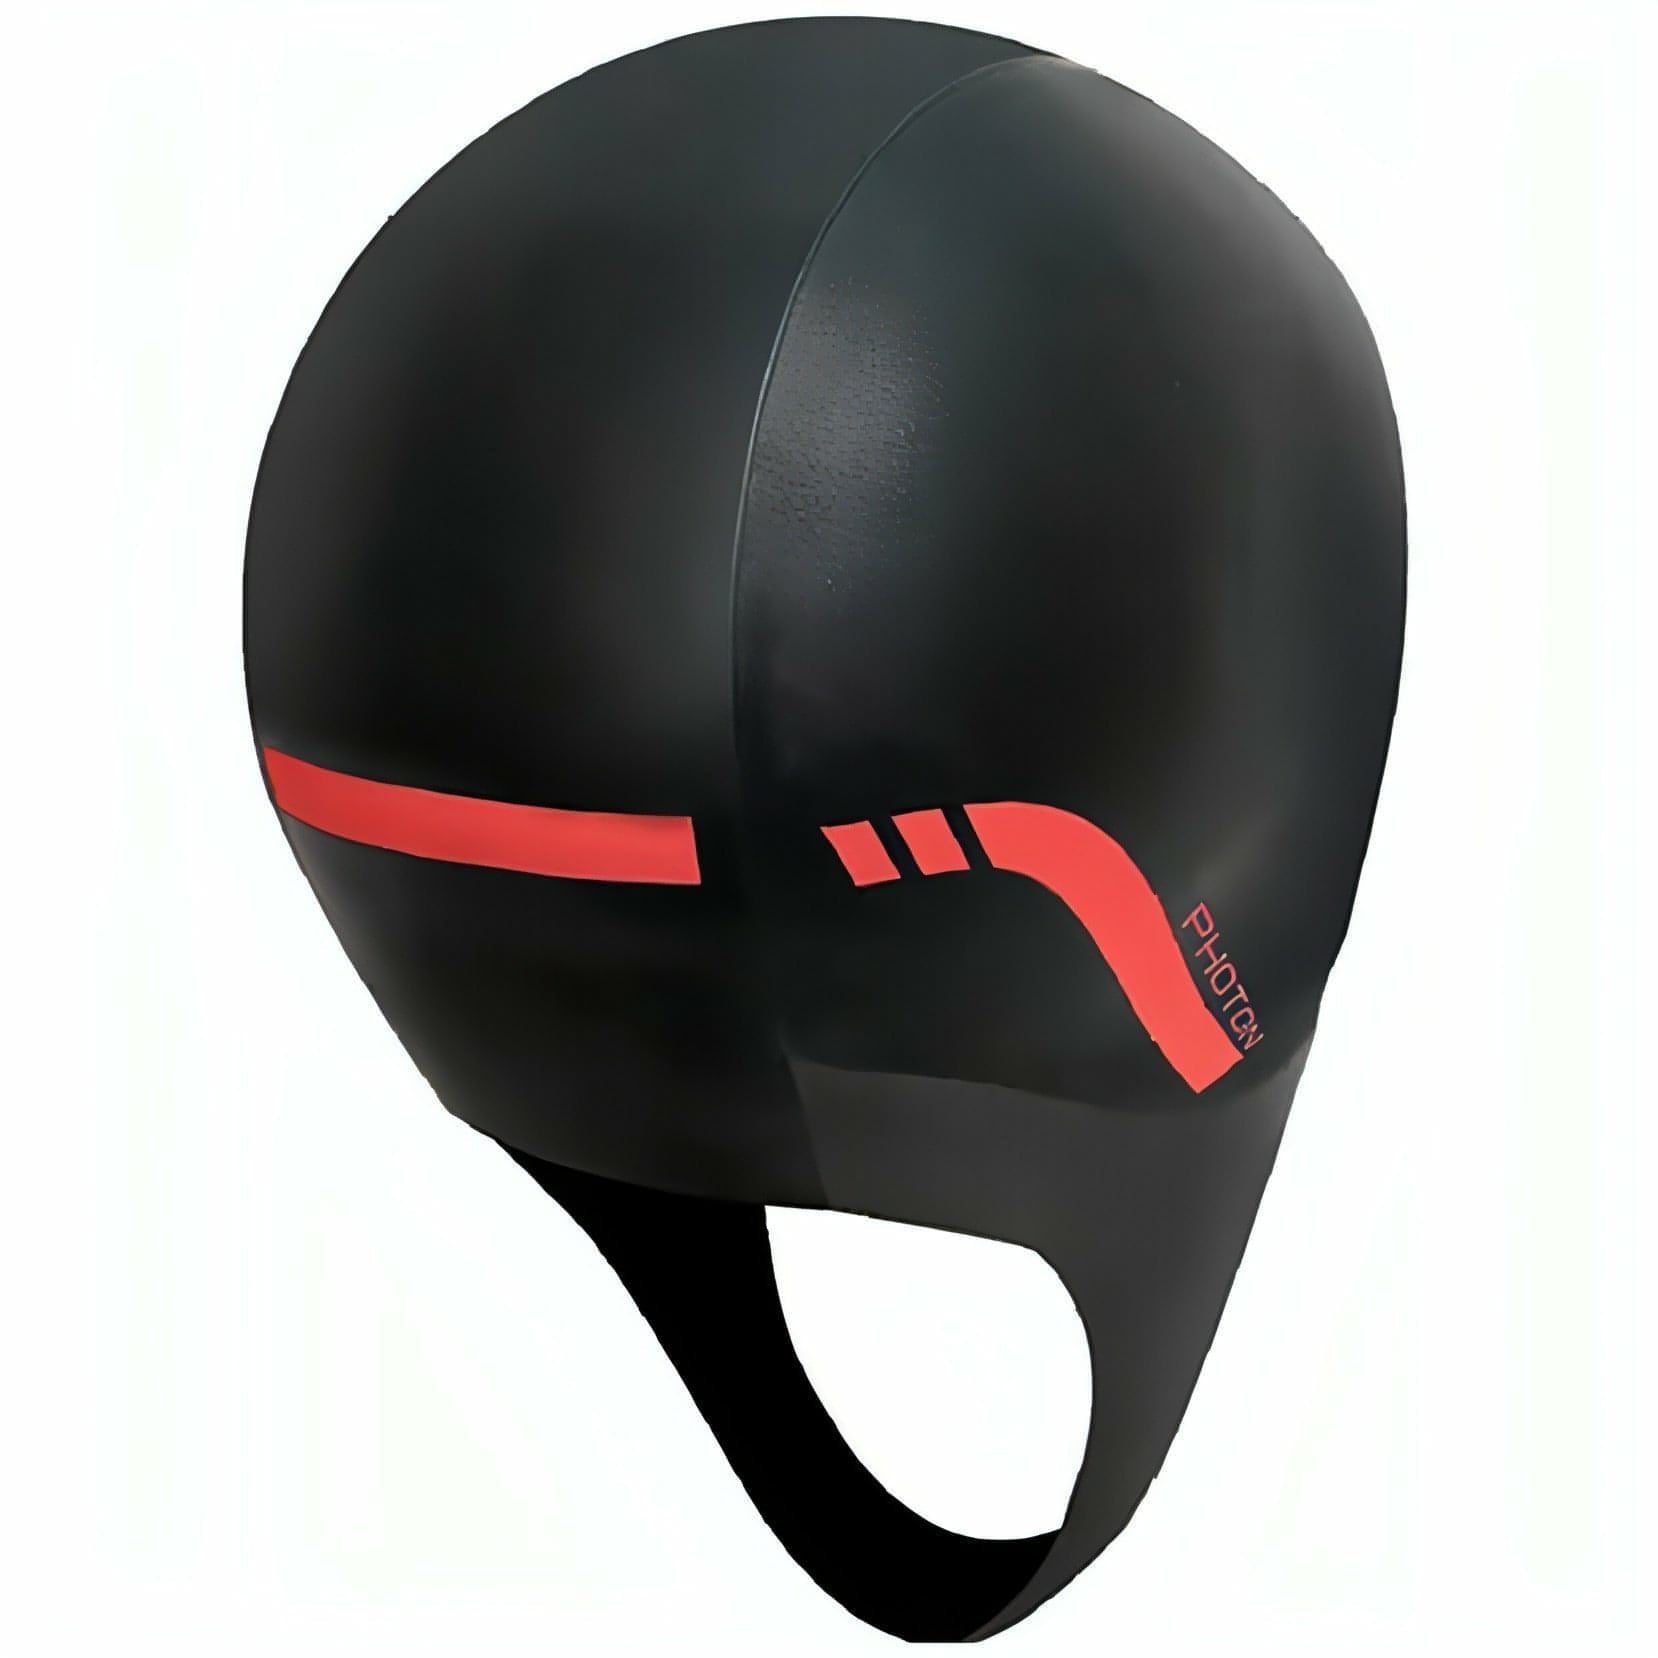 Speedo Fastskin Photon Swimming Cap - Black - Start Fitness